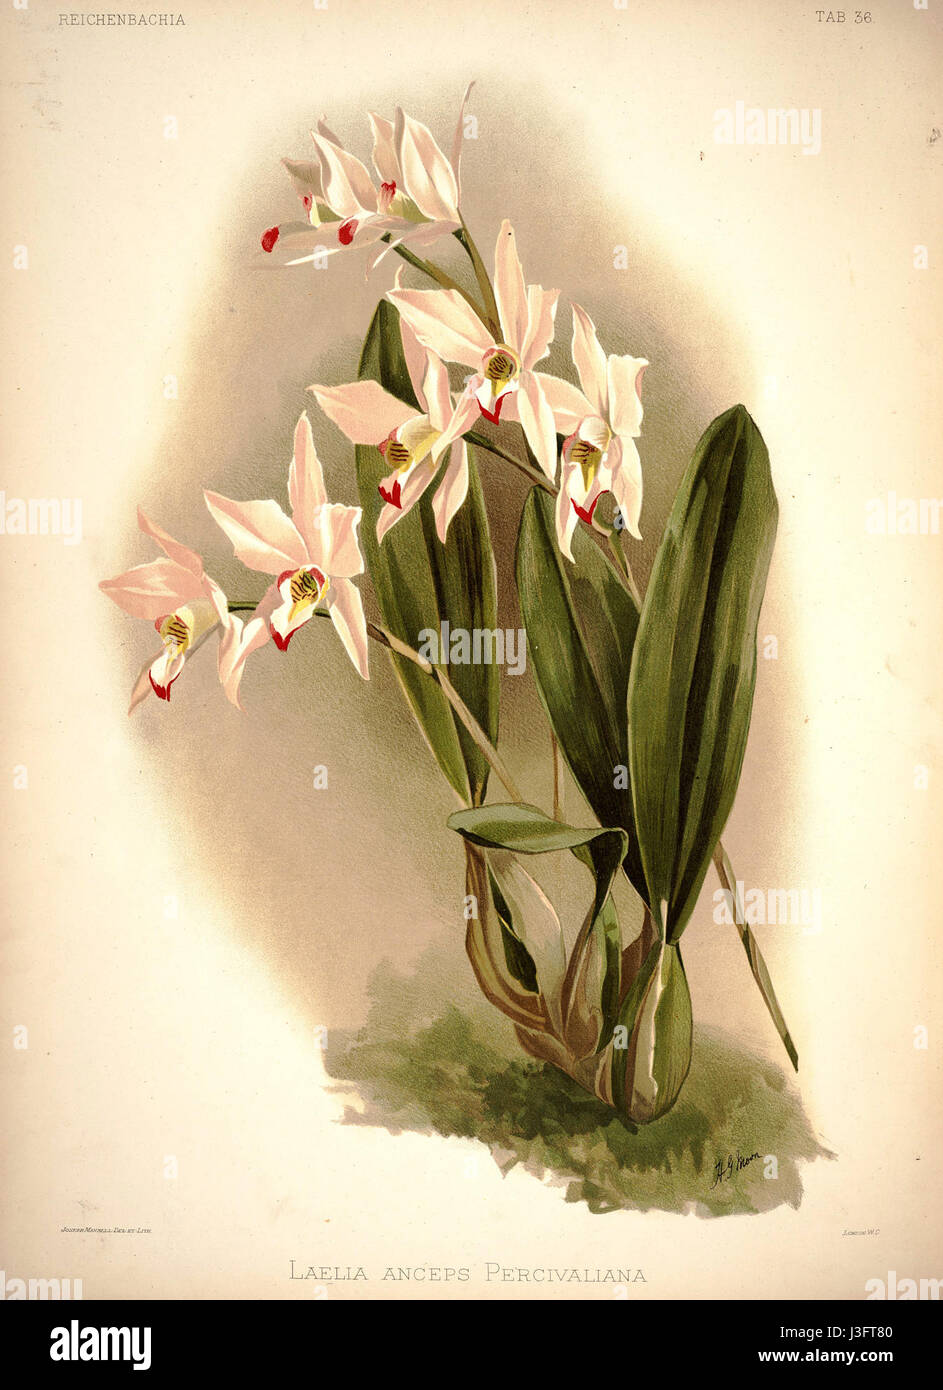 Frederick Sander   Reichenbachia I plate 36 (1888)   Laelia anceps percivaliana Stock Photo